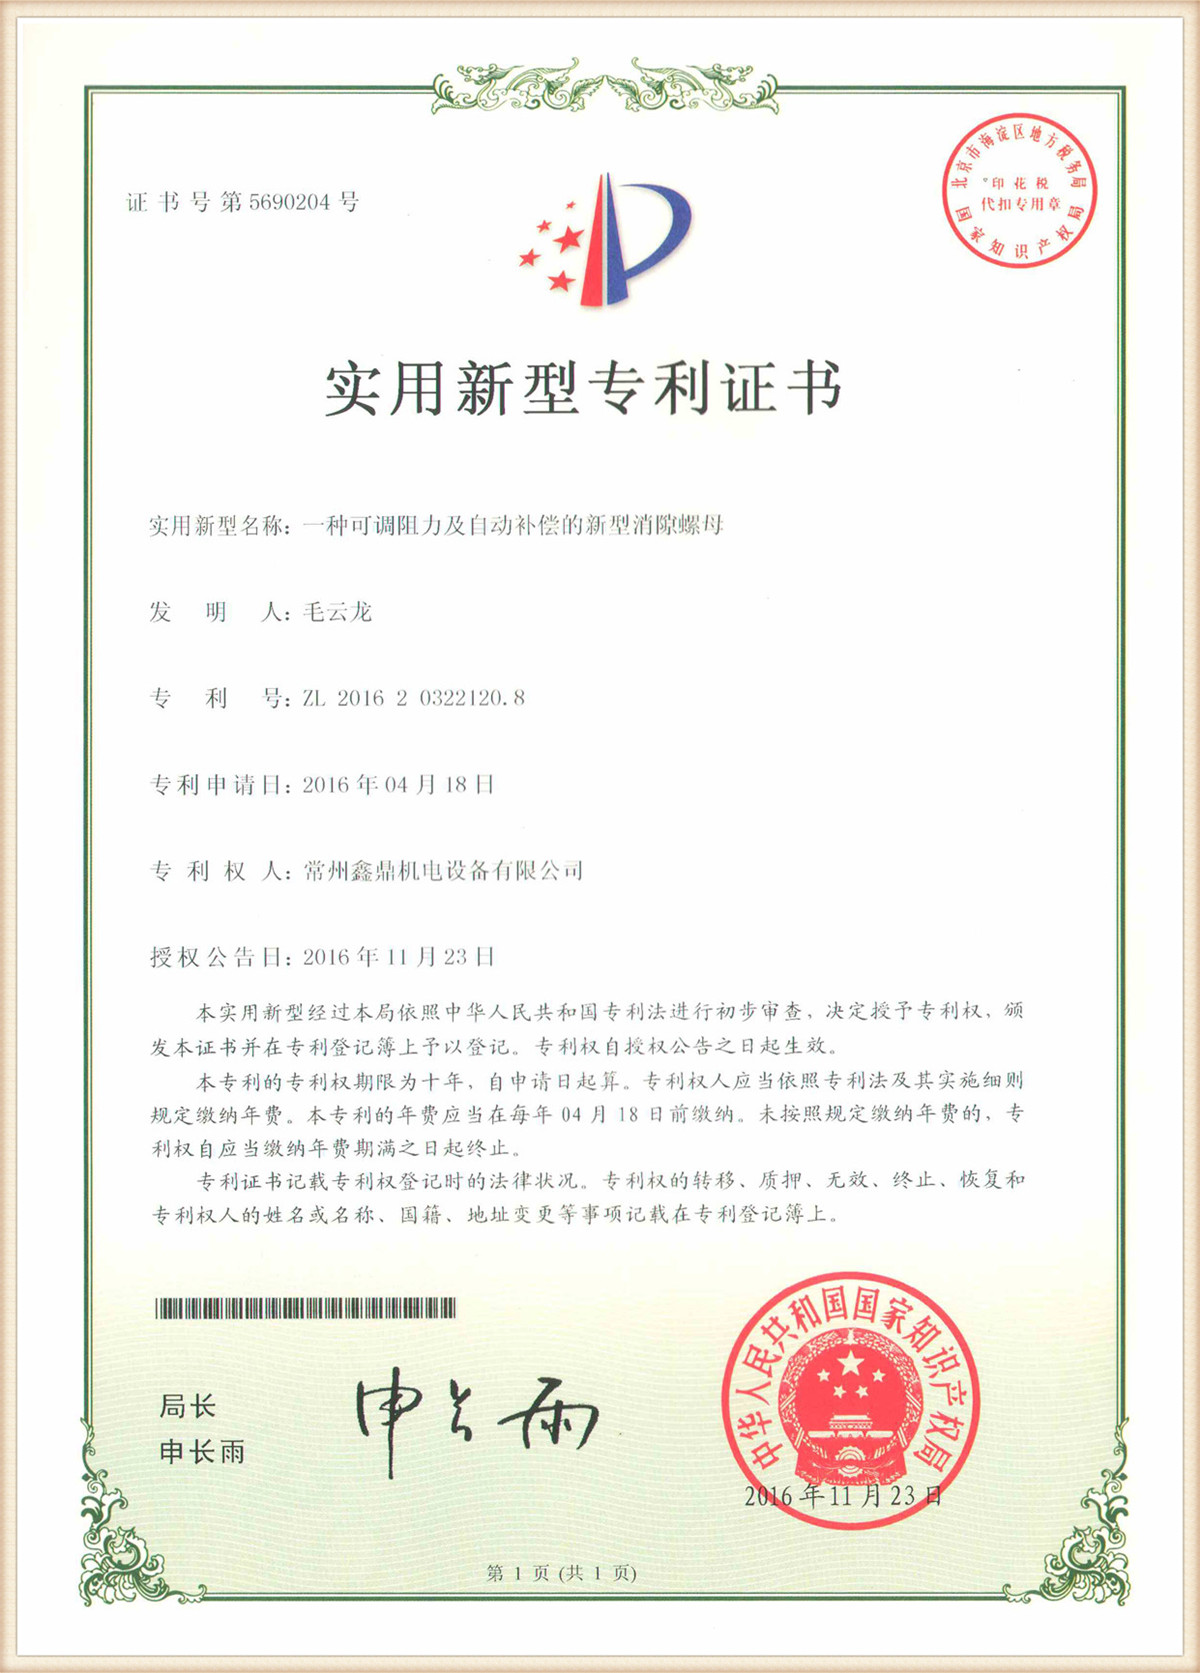 Patent certificate (2)